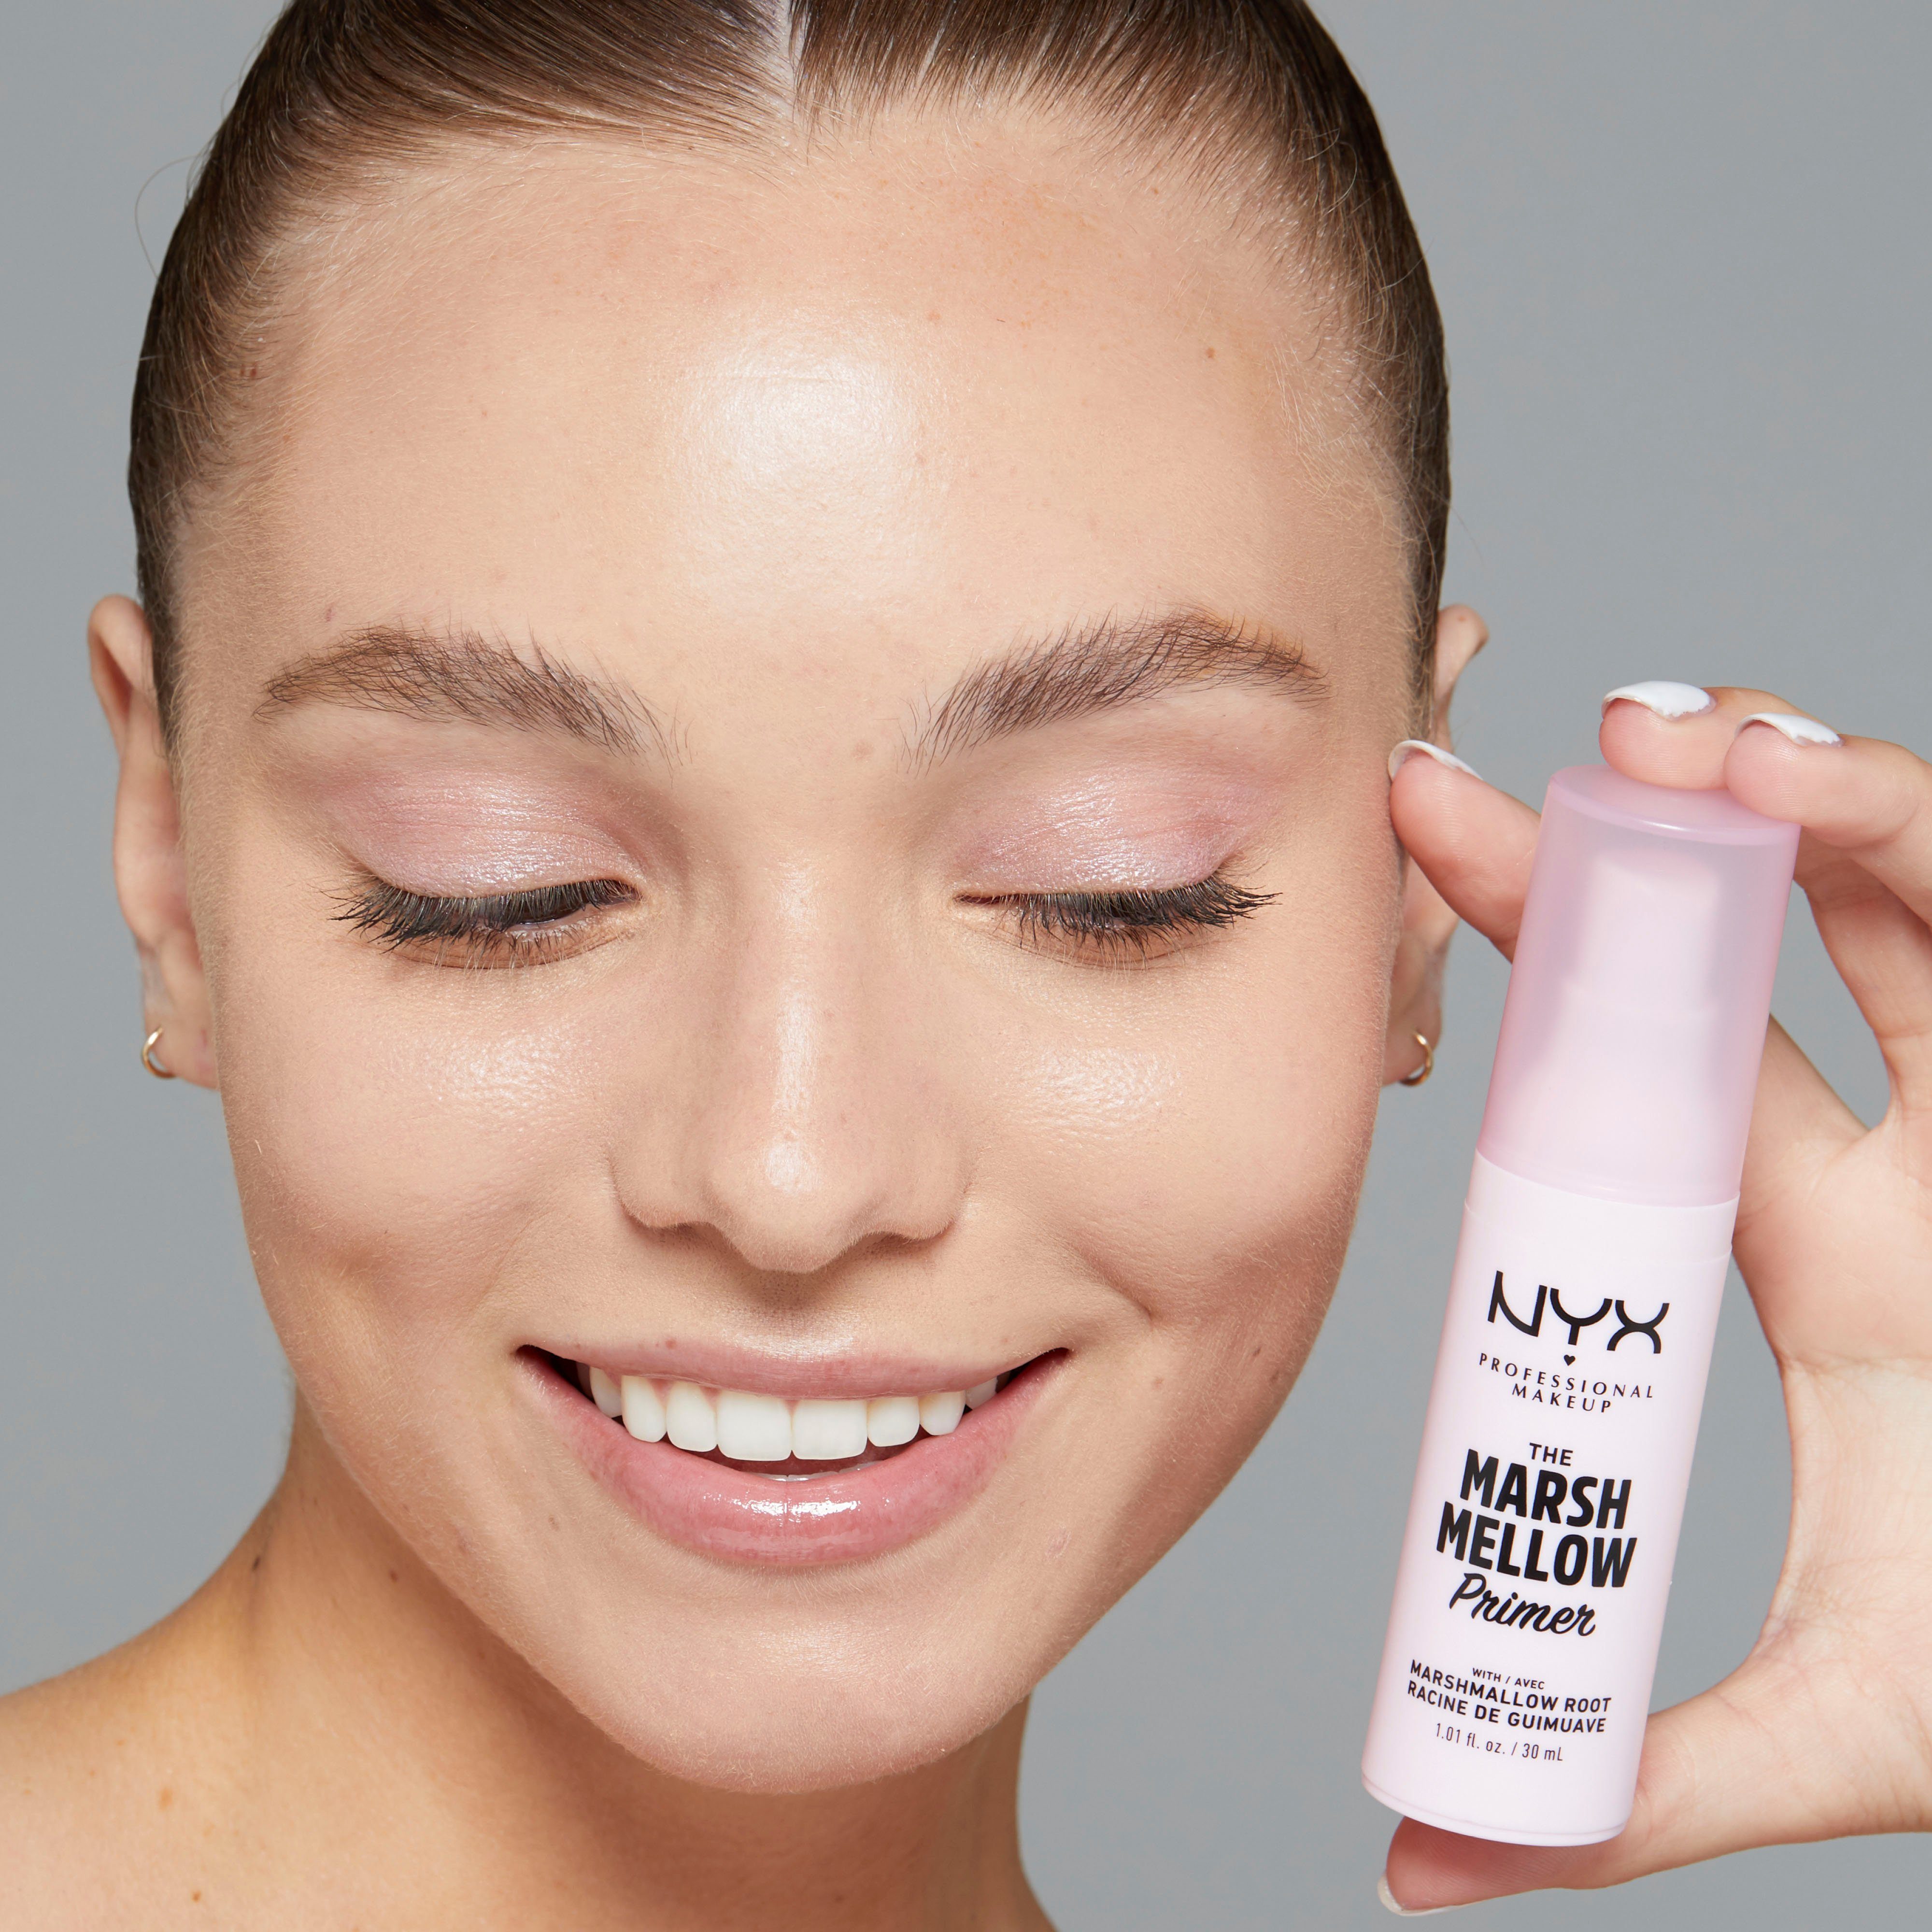 Smooth NYX Marsh Primer Primer Mallow Professional NYX Makeup